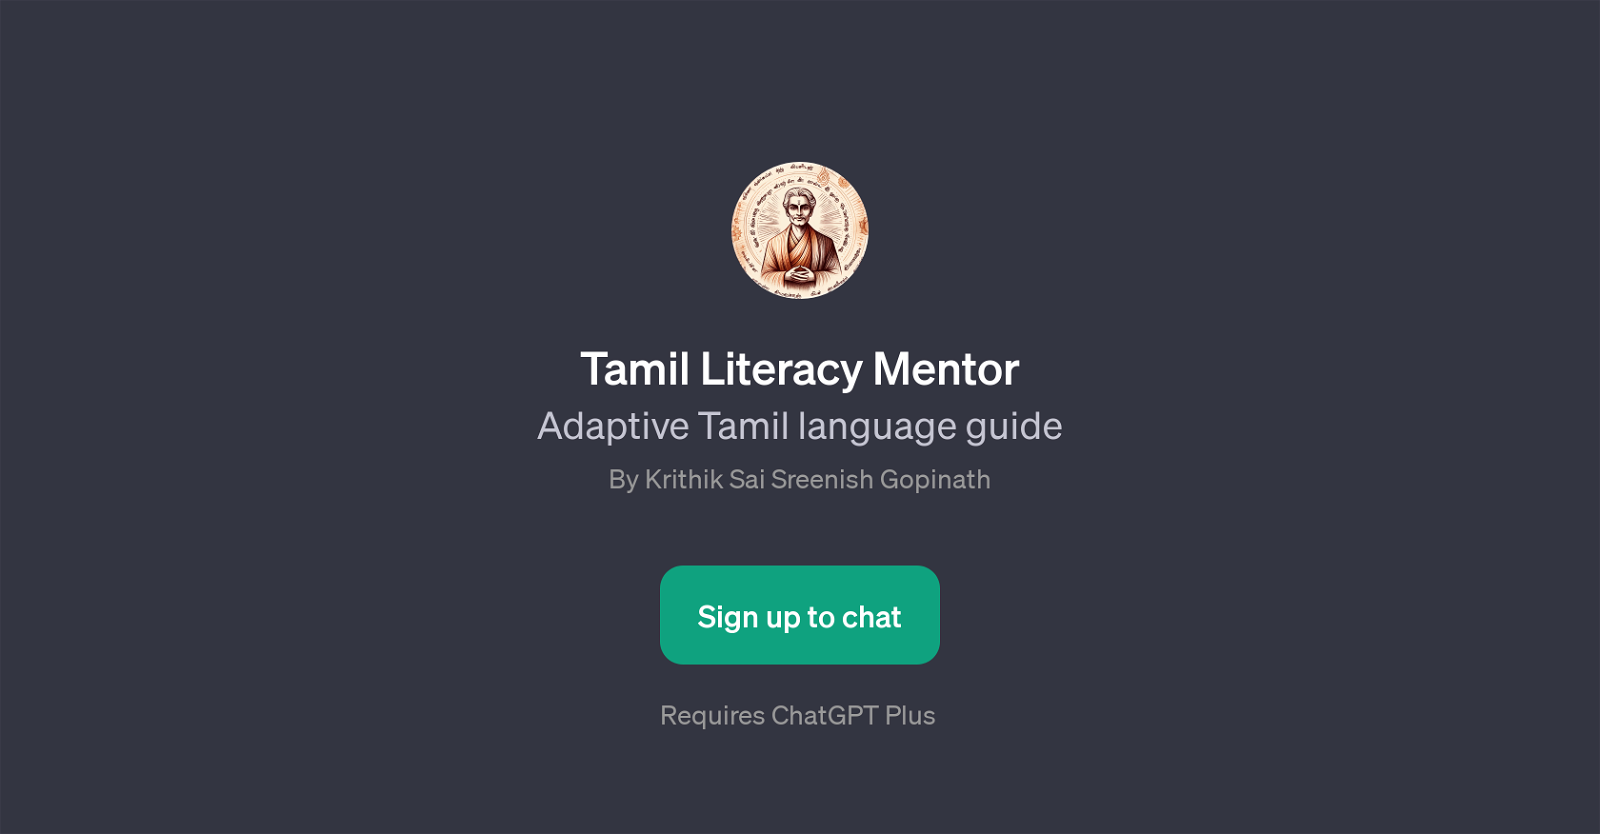 Tamil Literacy Mentor website